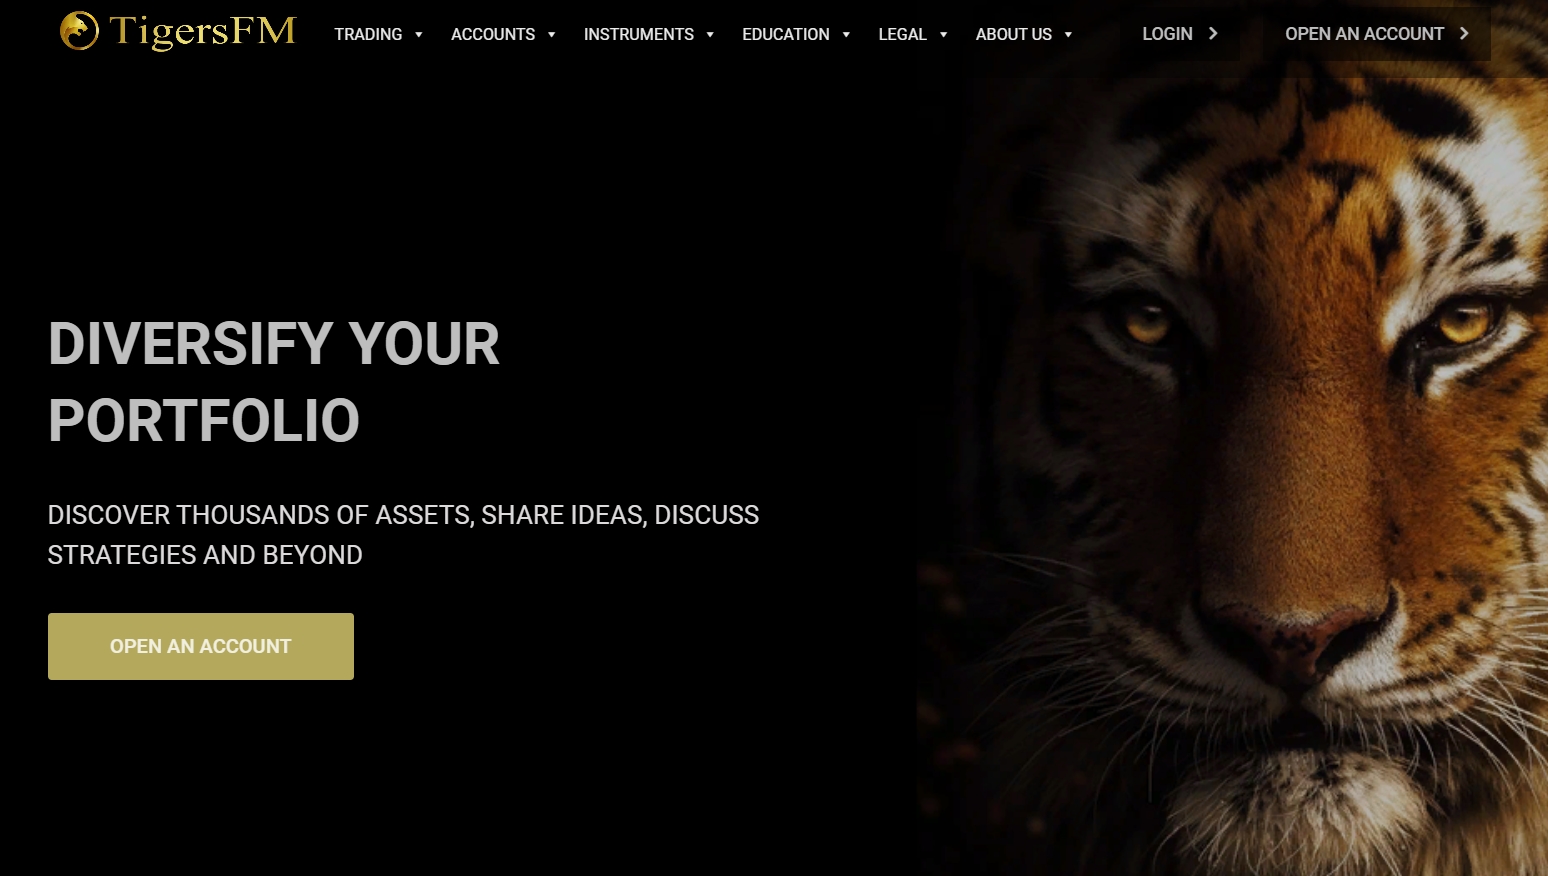 Tigersfm homepage